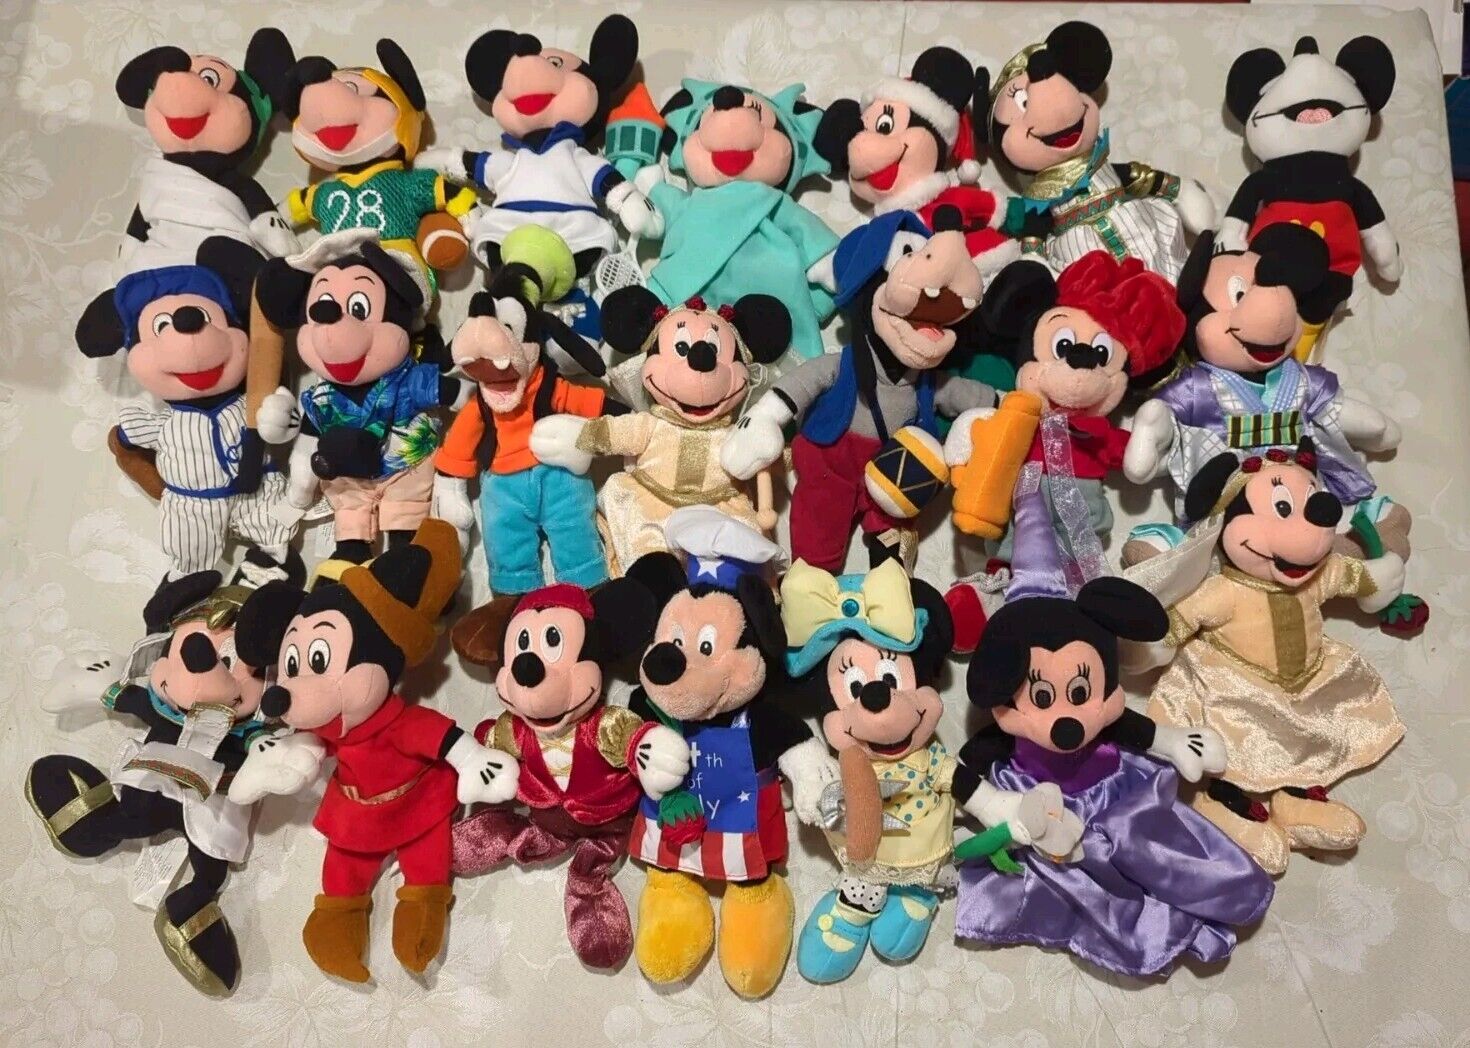 Lot of 21 Disney Store Stuffed Toy Plush Mini Bean Bag Mickey, Minnie, Pluto Etc